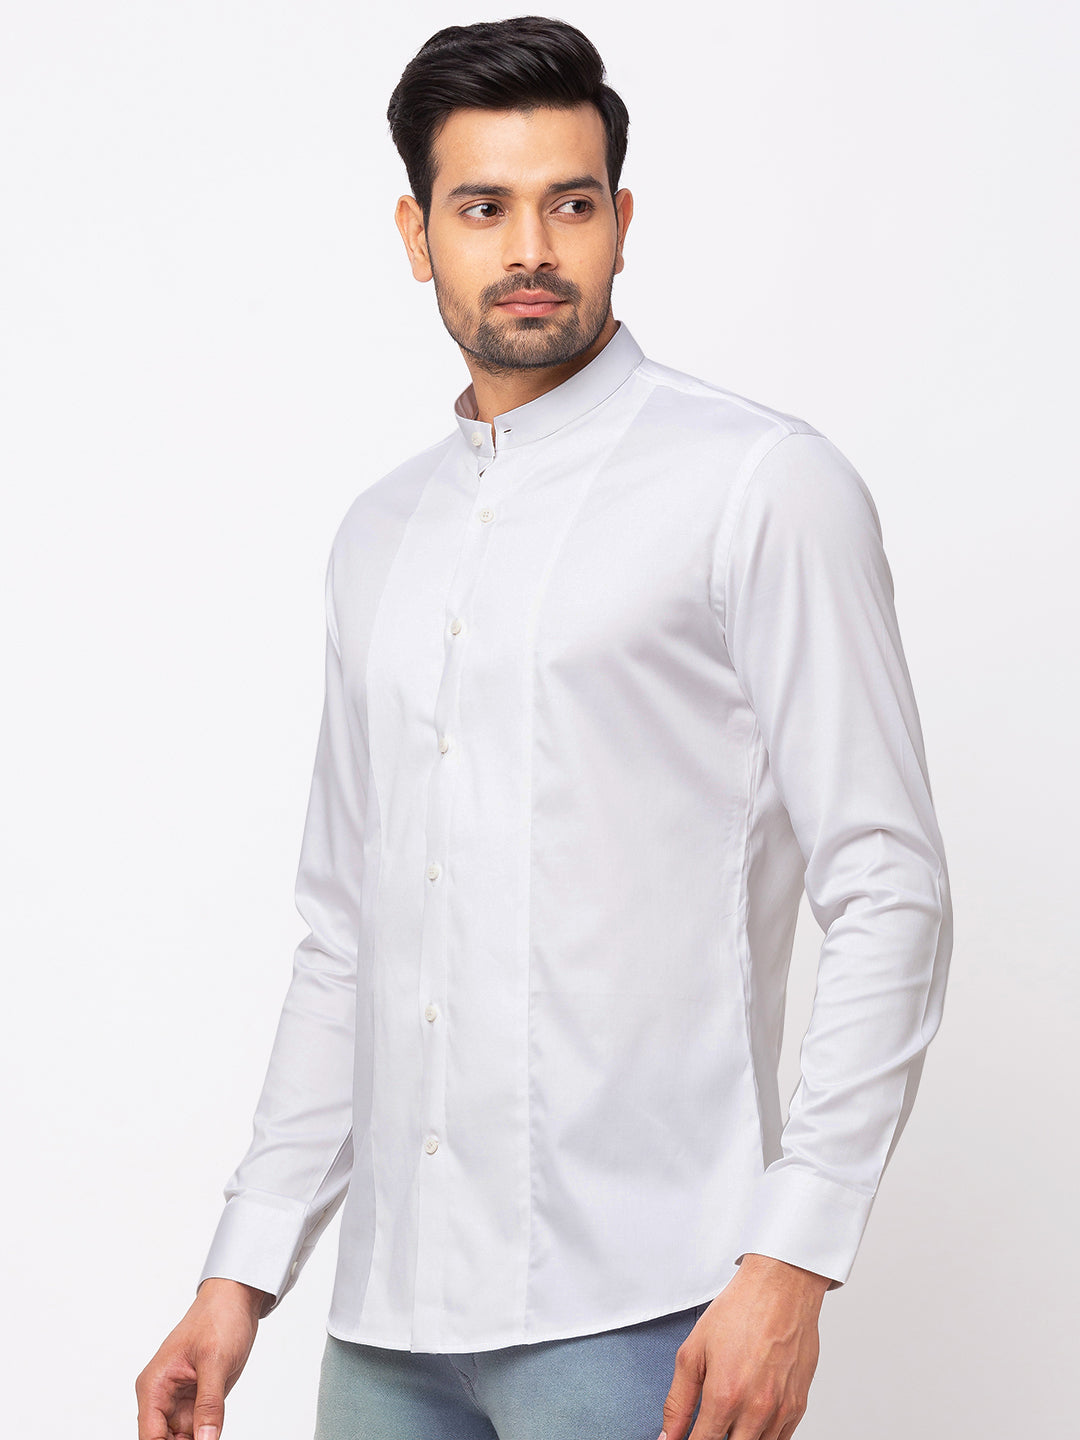 White Formal Shirt with Mandarin Collar